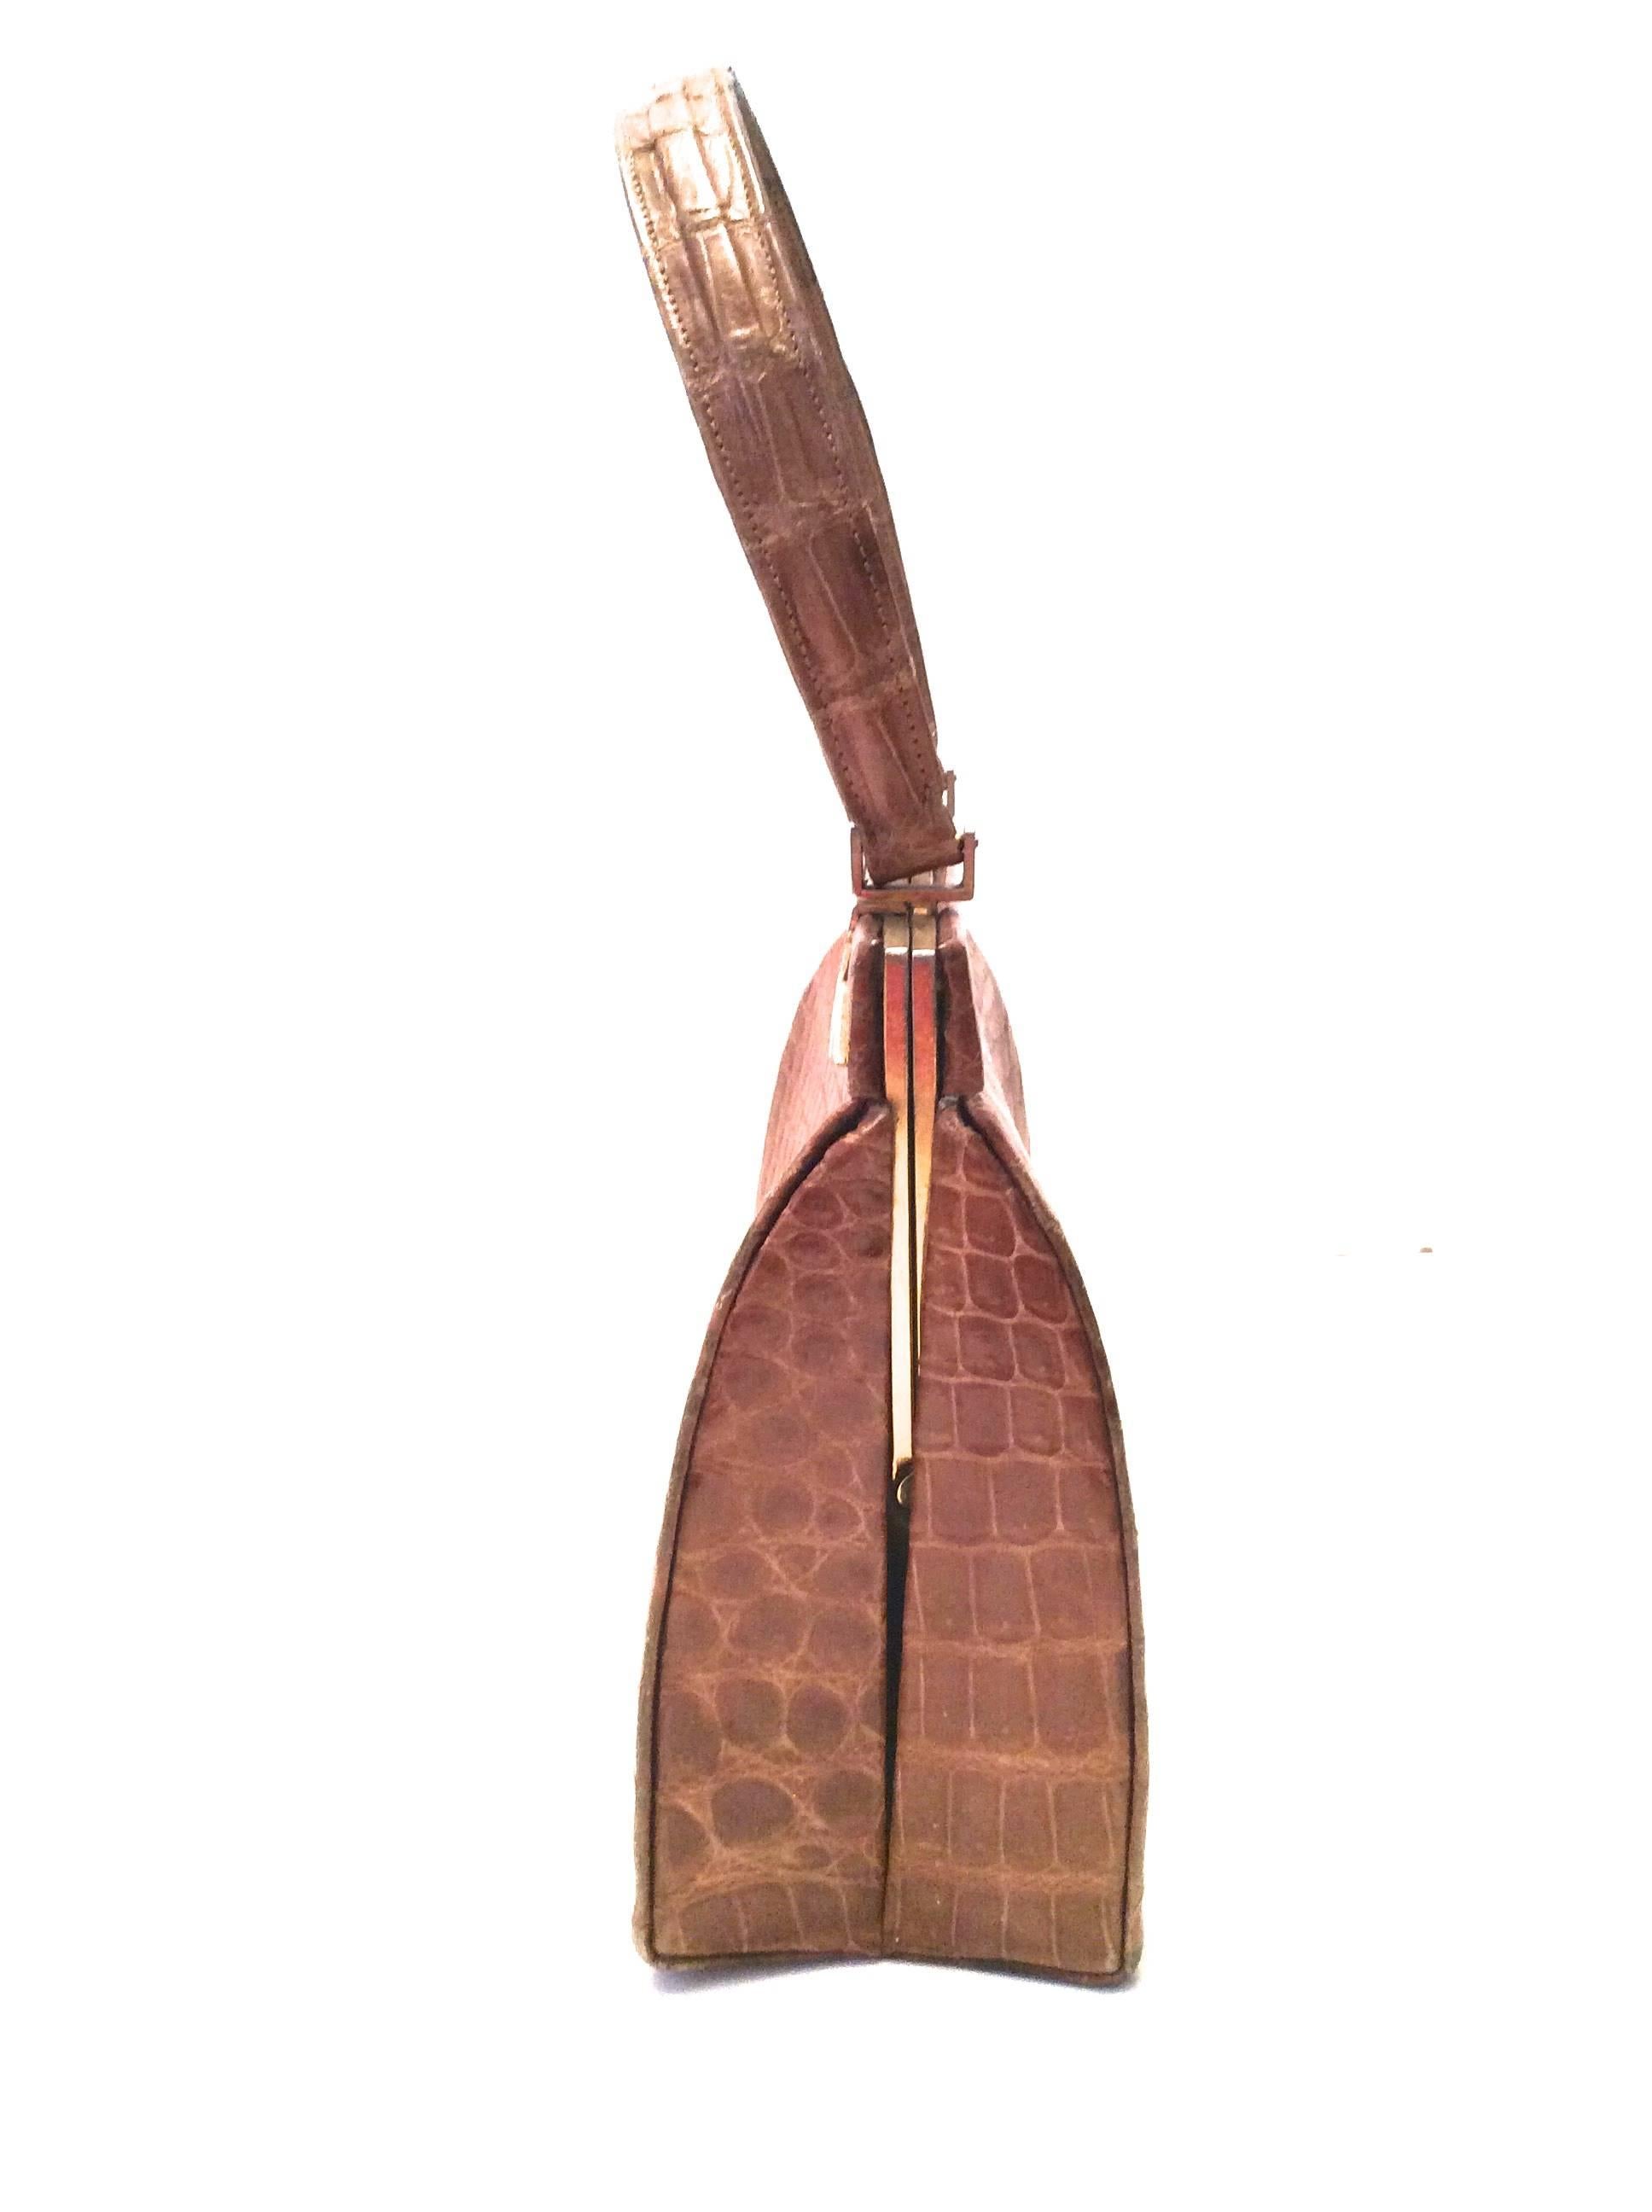 Magnificent Vintage Alligator Handbag - Tan / Light Brown In Excellent Condition For Sale In Boca Raton, FL